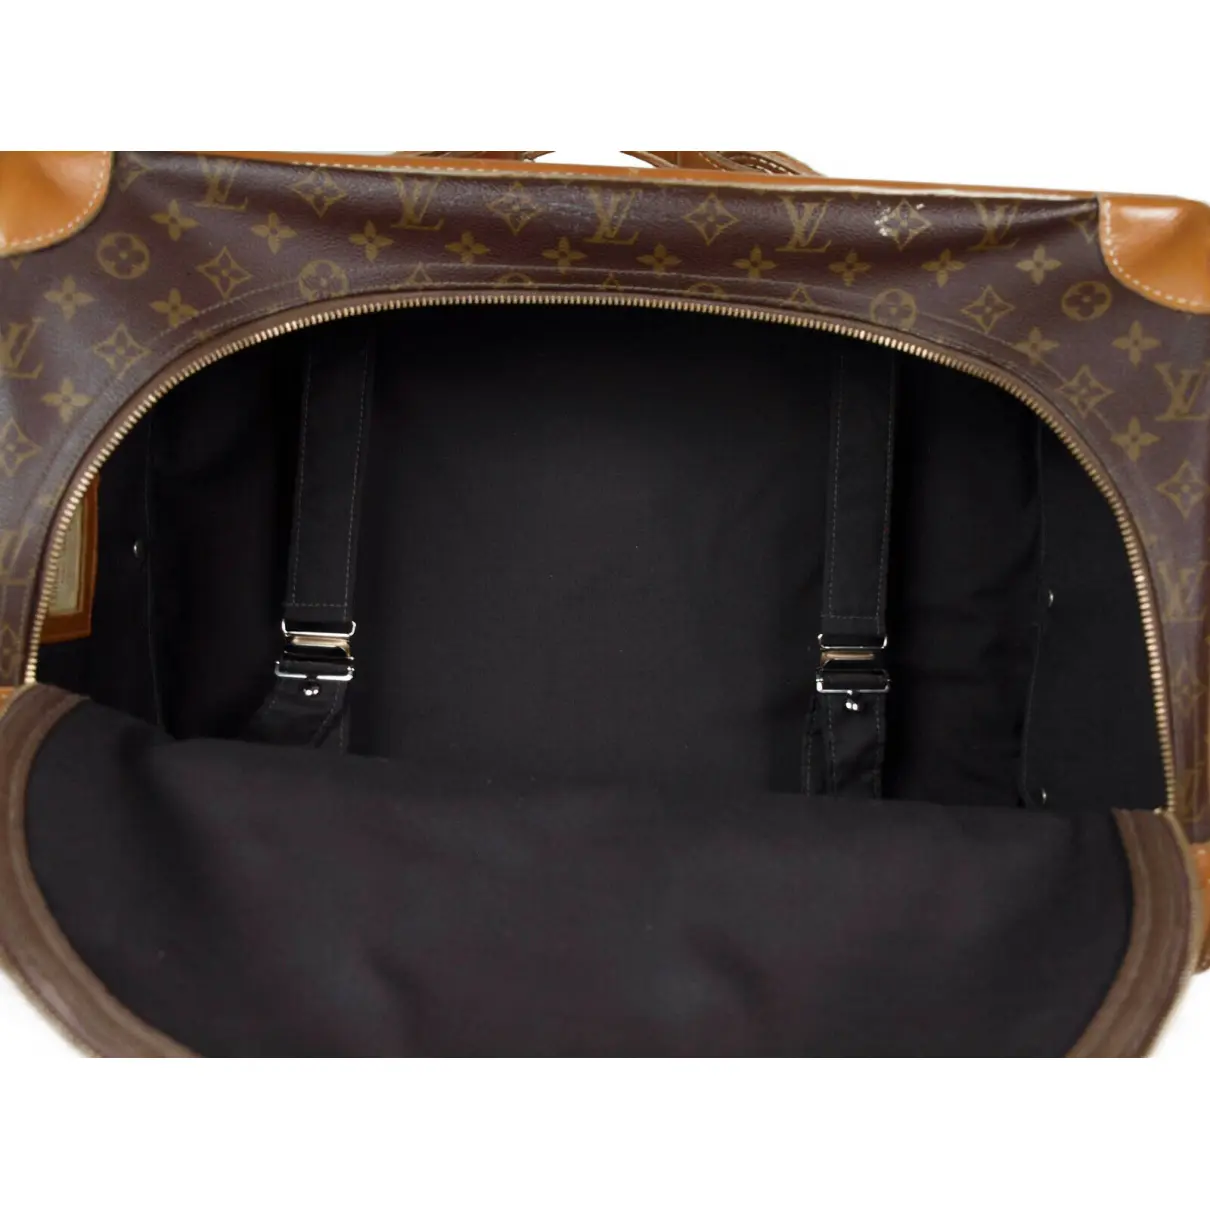 Buy Louis Vuitton Pullman leather travel bag online